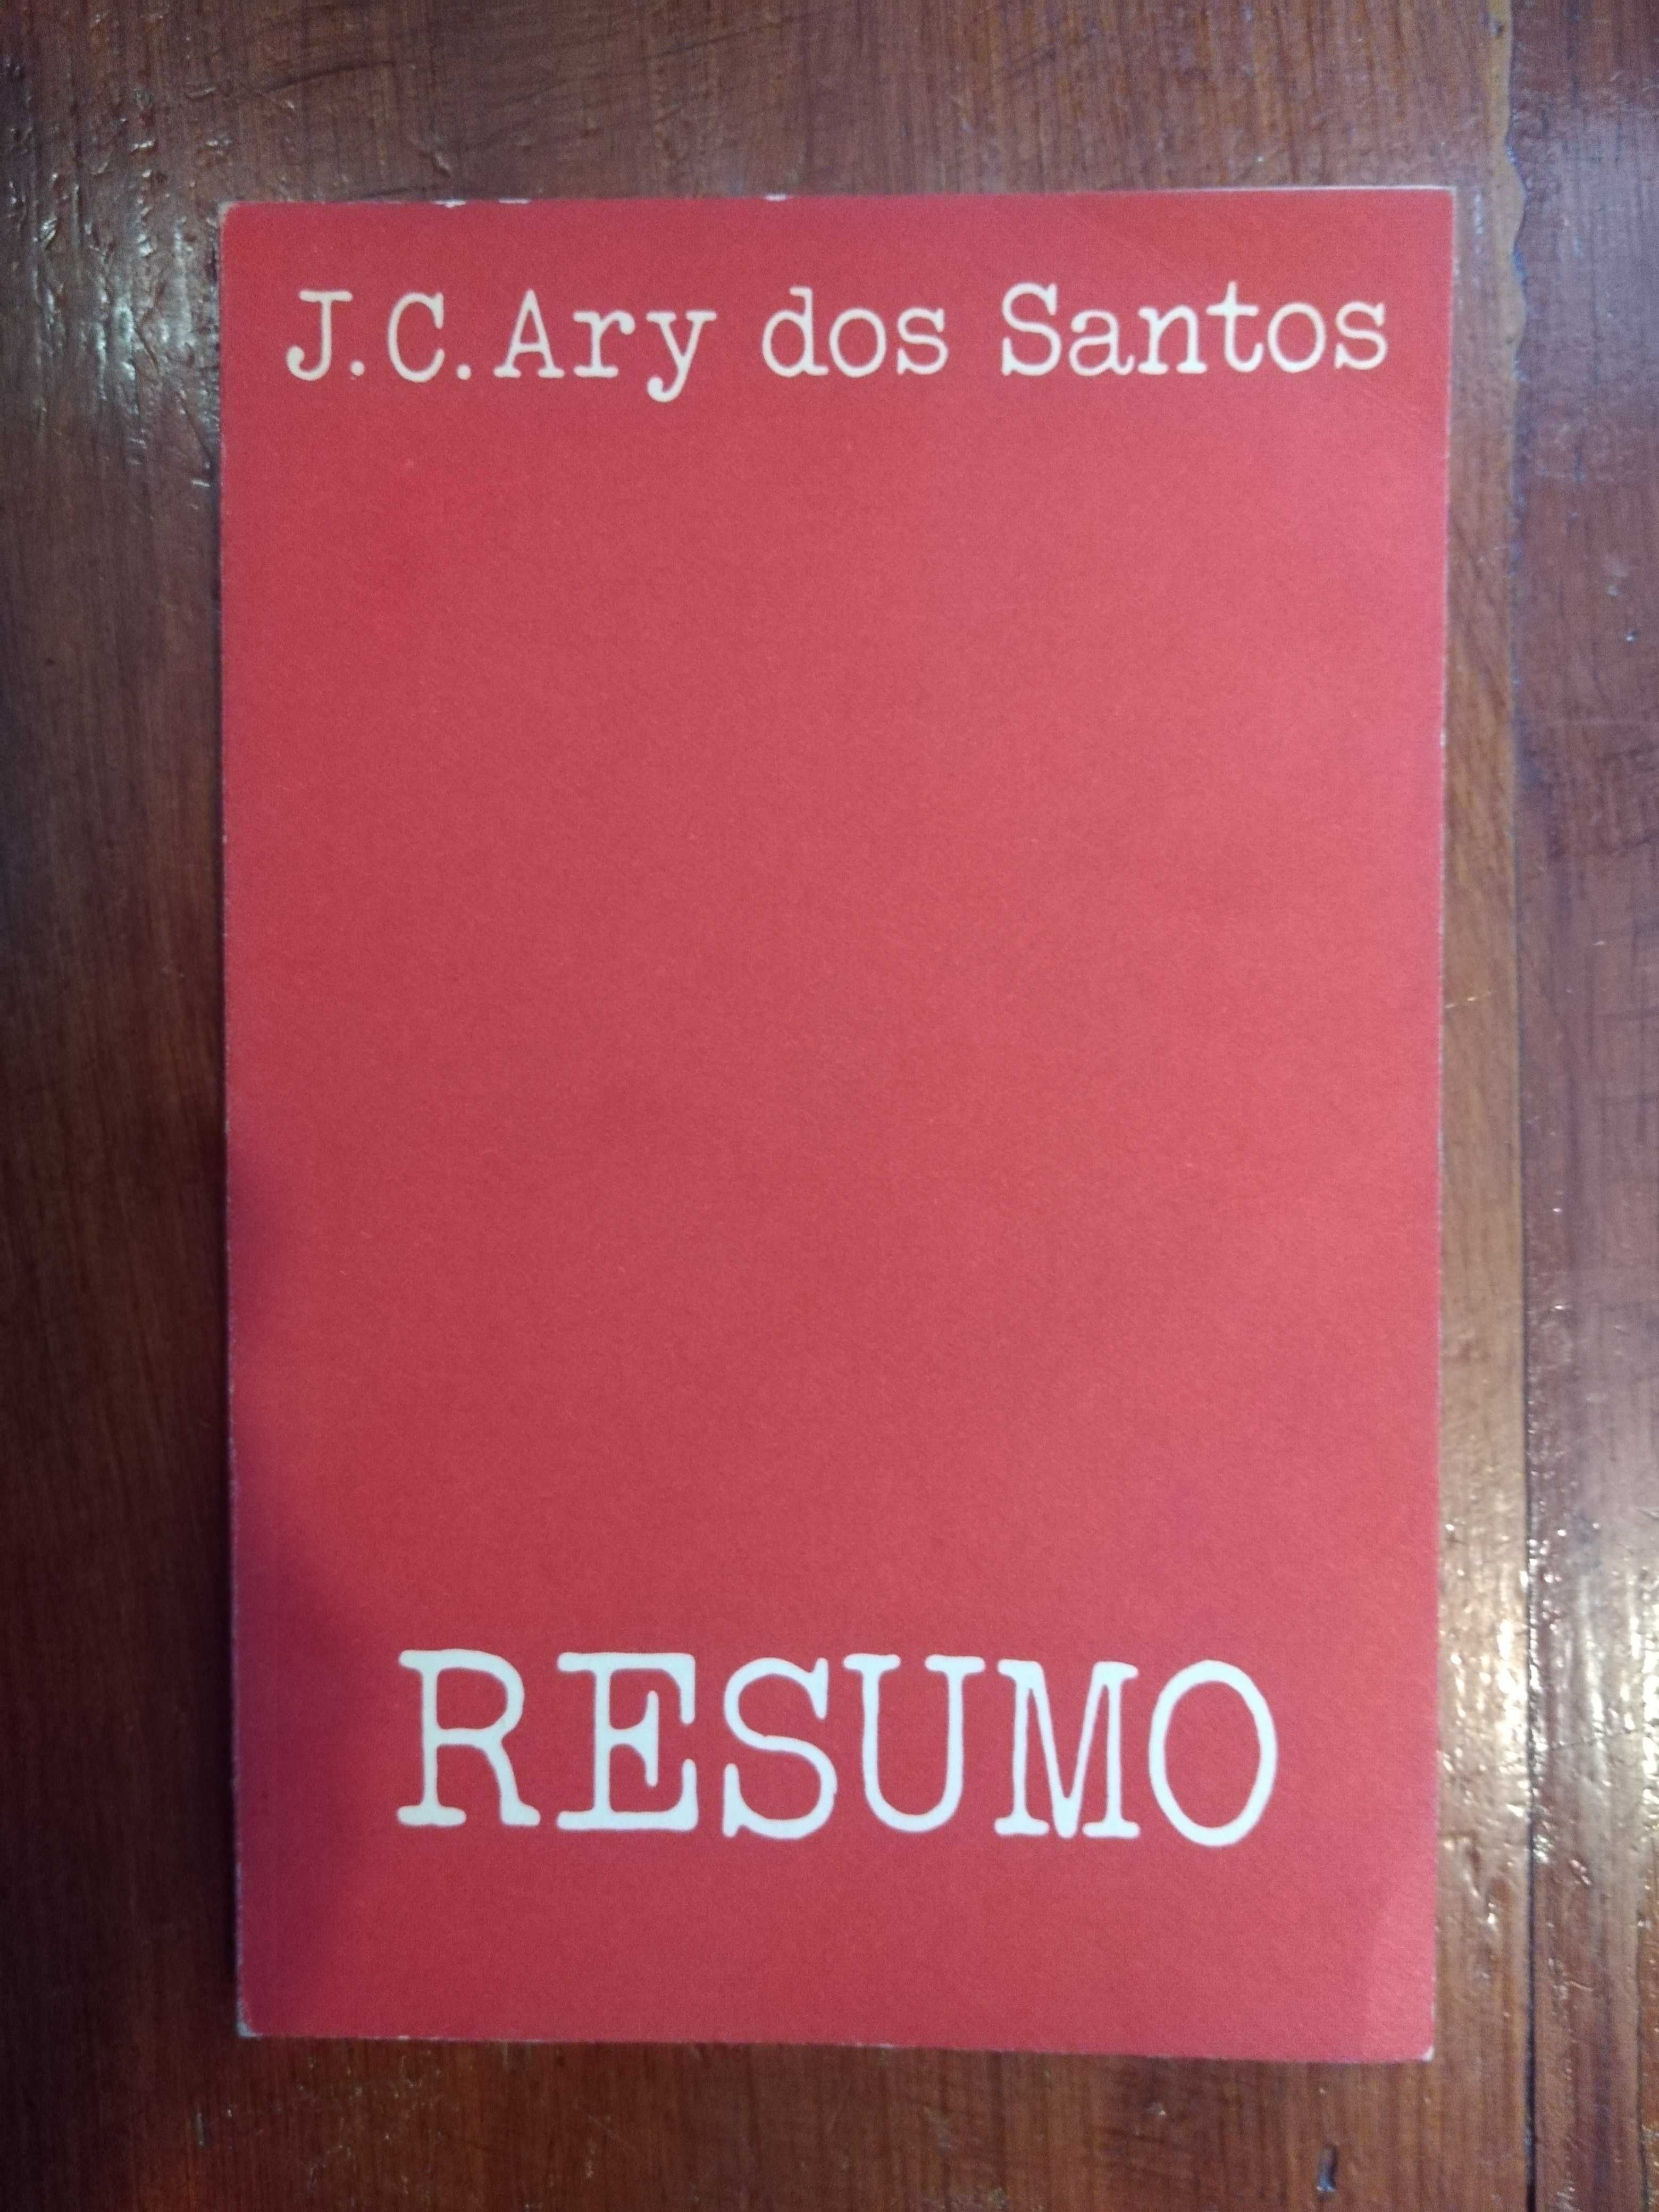 J. C. Ary dos Santos - Resumo [1.ª ed.]